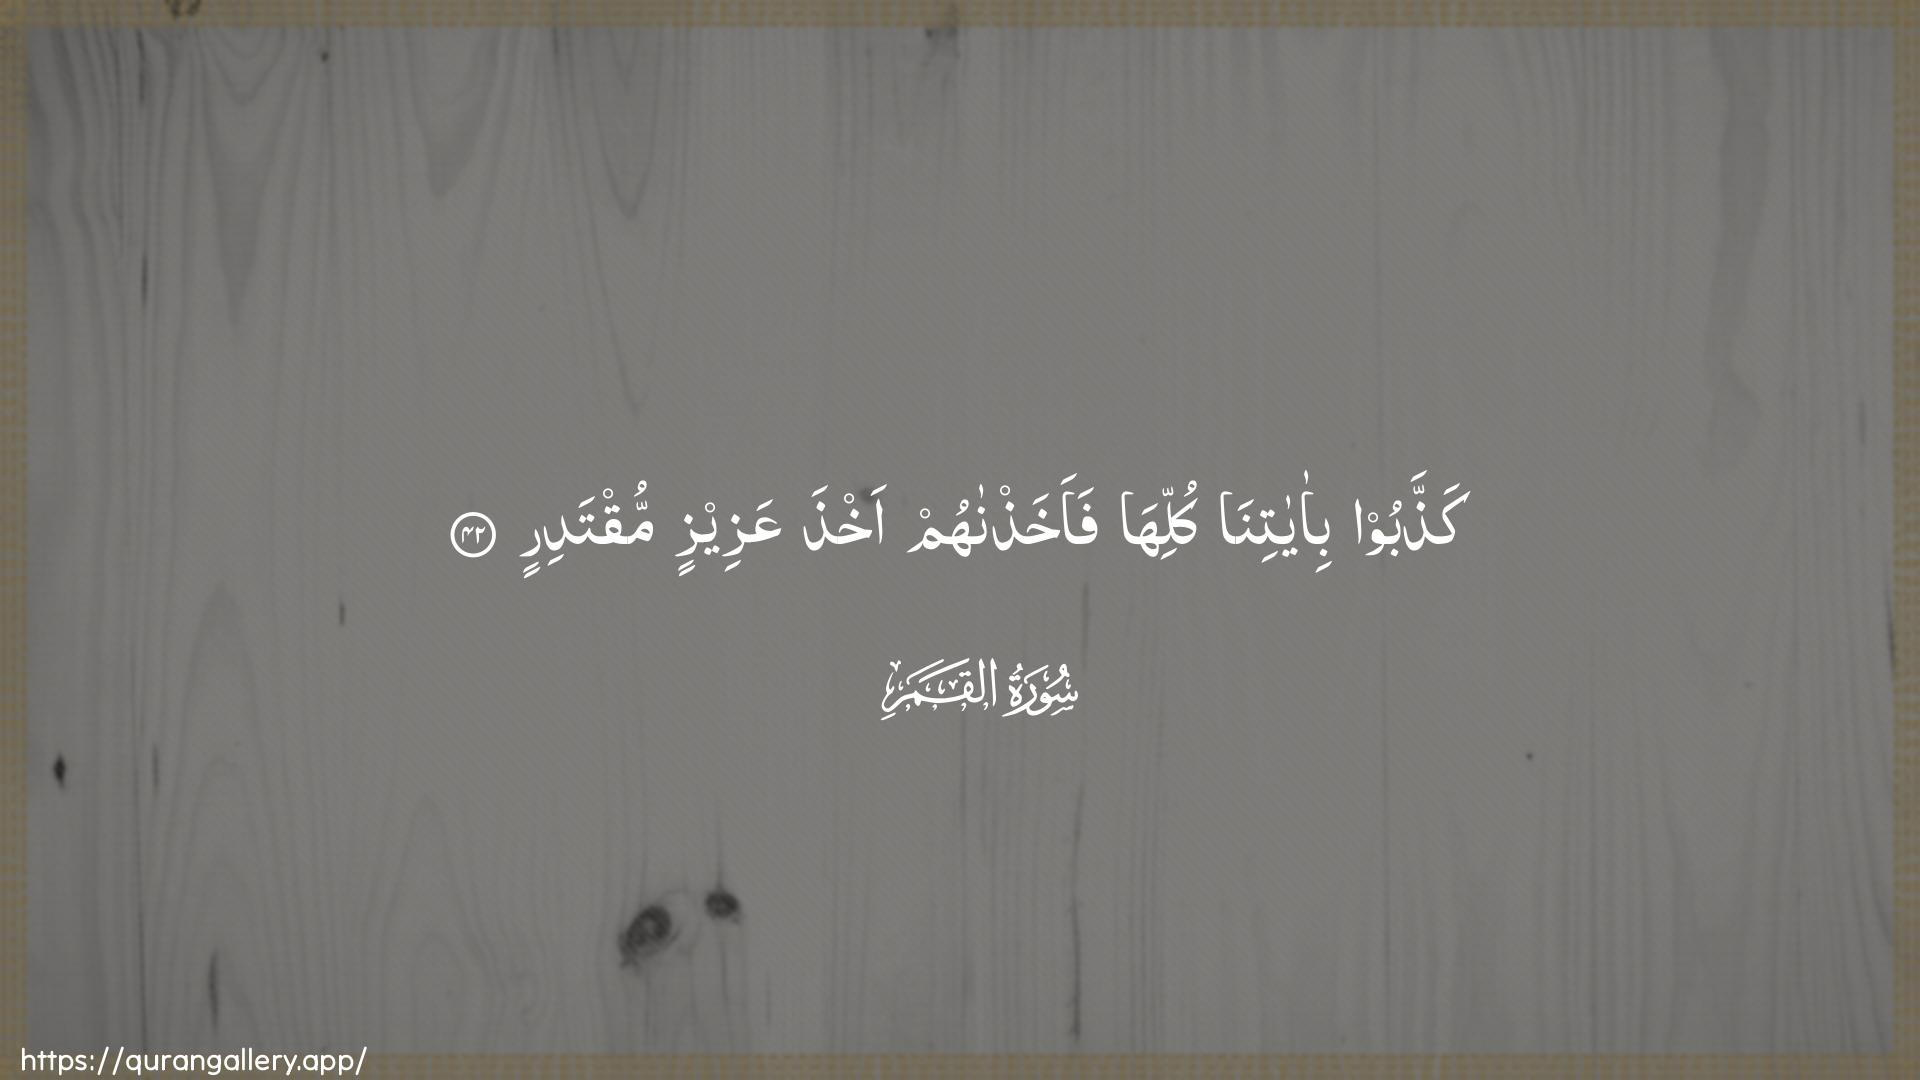 Surah Al-Qamar Ayah 42 of 54 HD Wallpaper: Download Beautiful horizontal Quran Verse Image | Kaththaboo bi-ayatinakulliha faakhathnahum akhthaAAazeezin muqtadir